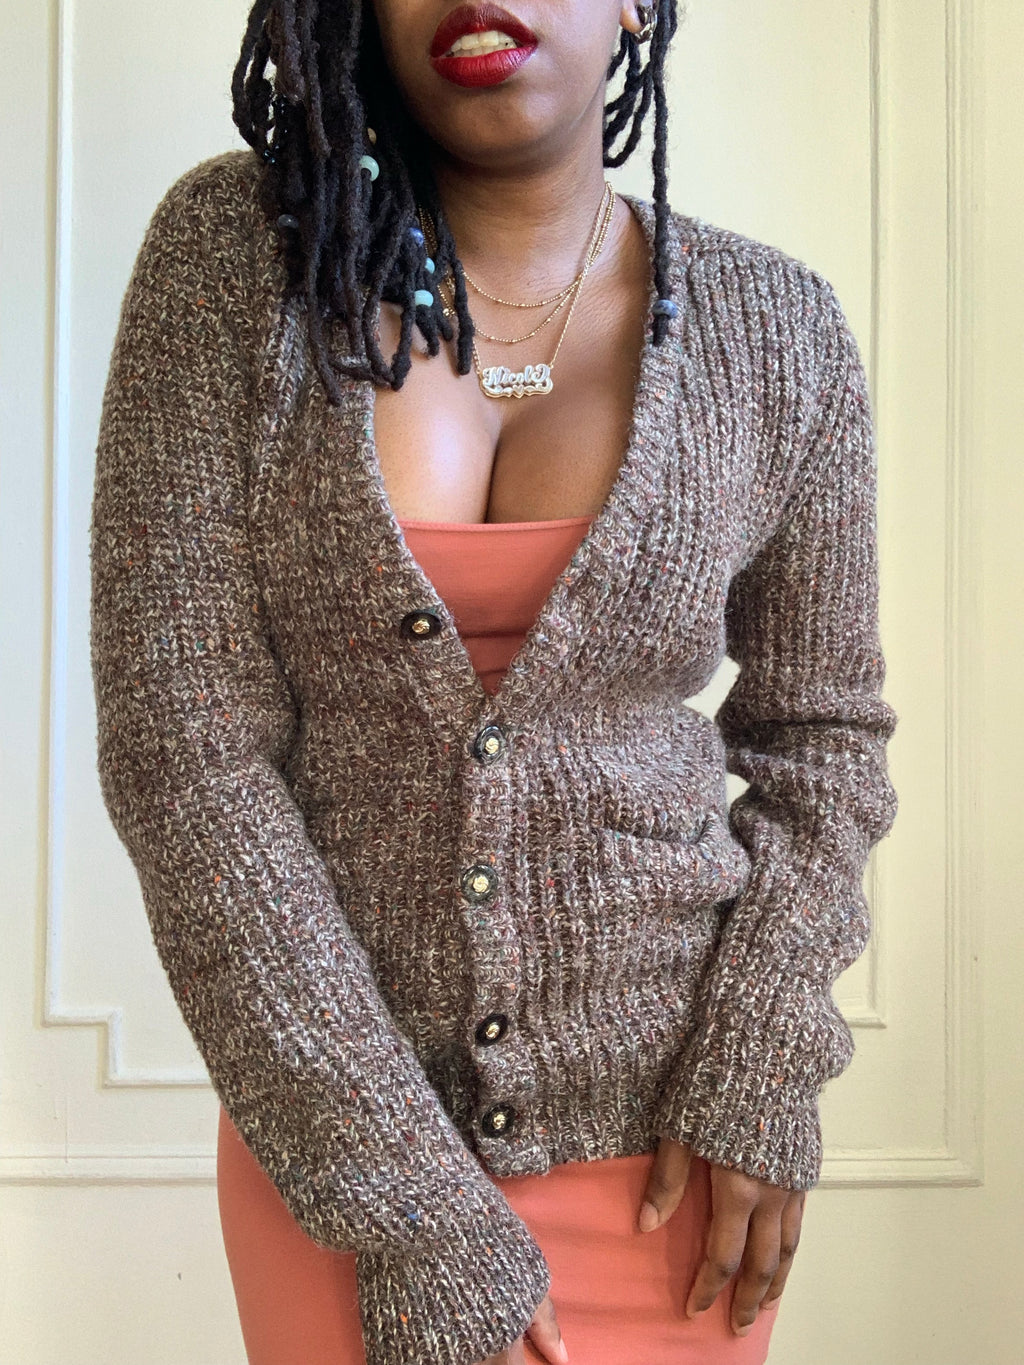 Vintage 80s Brown Speckled Knit Cardigan Sweater